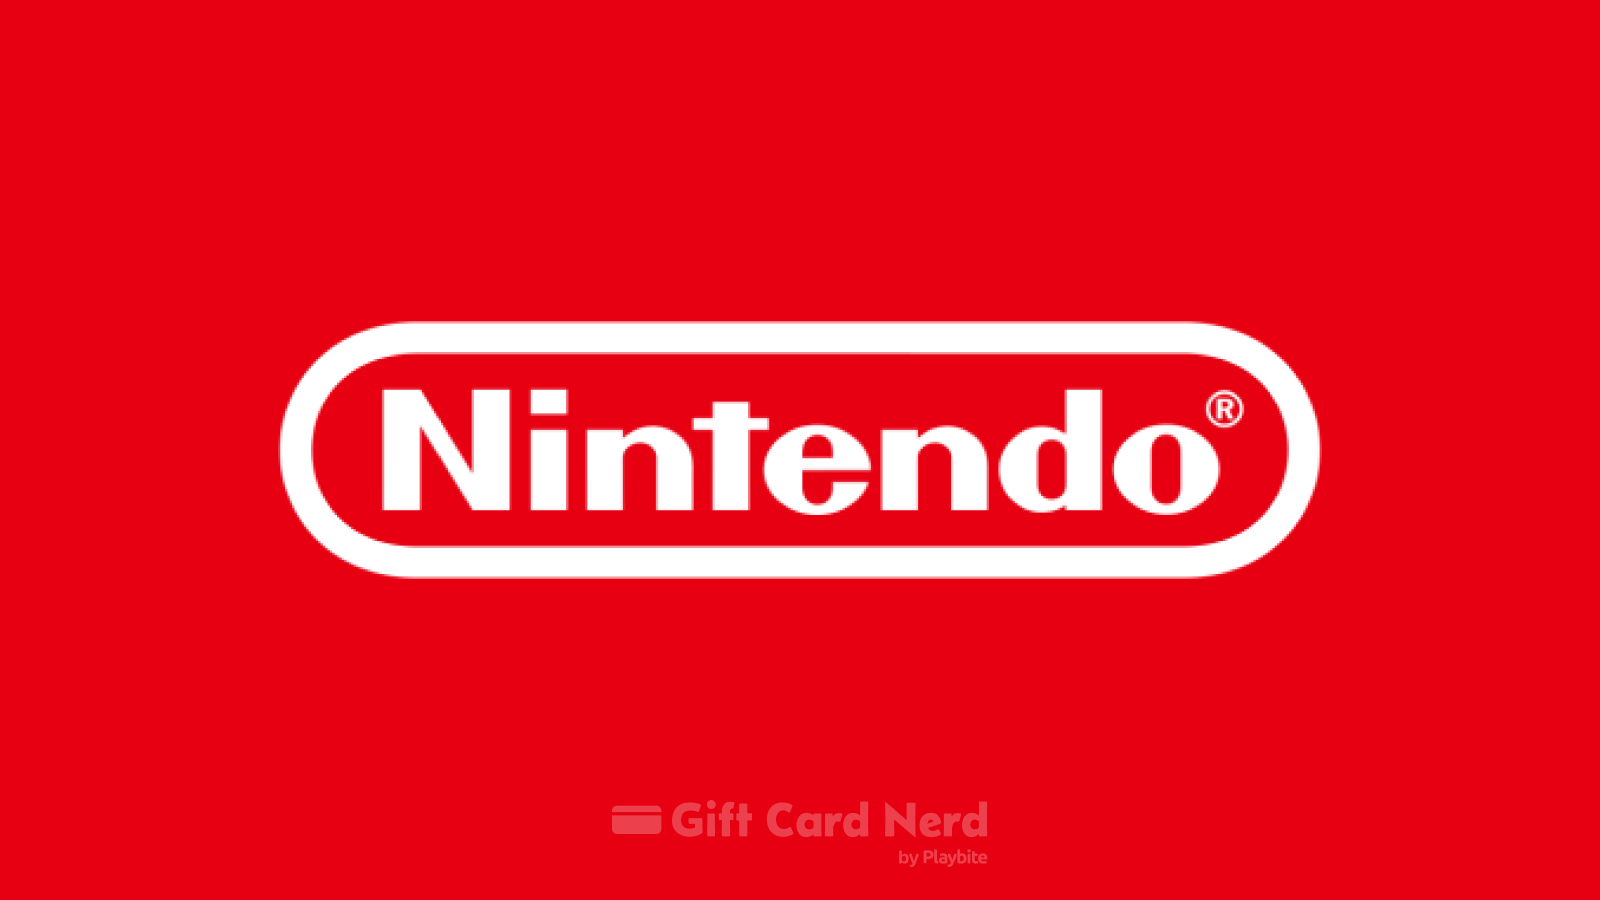 Can I Use a Nintendo Gift Card on DoorDash?